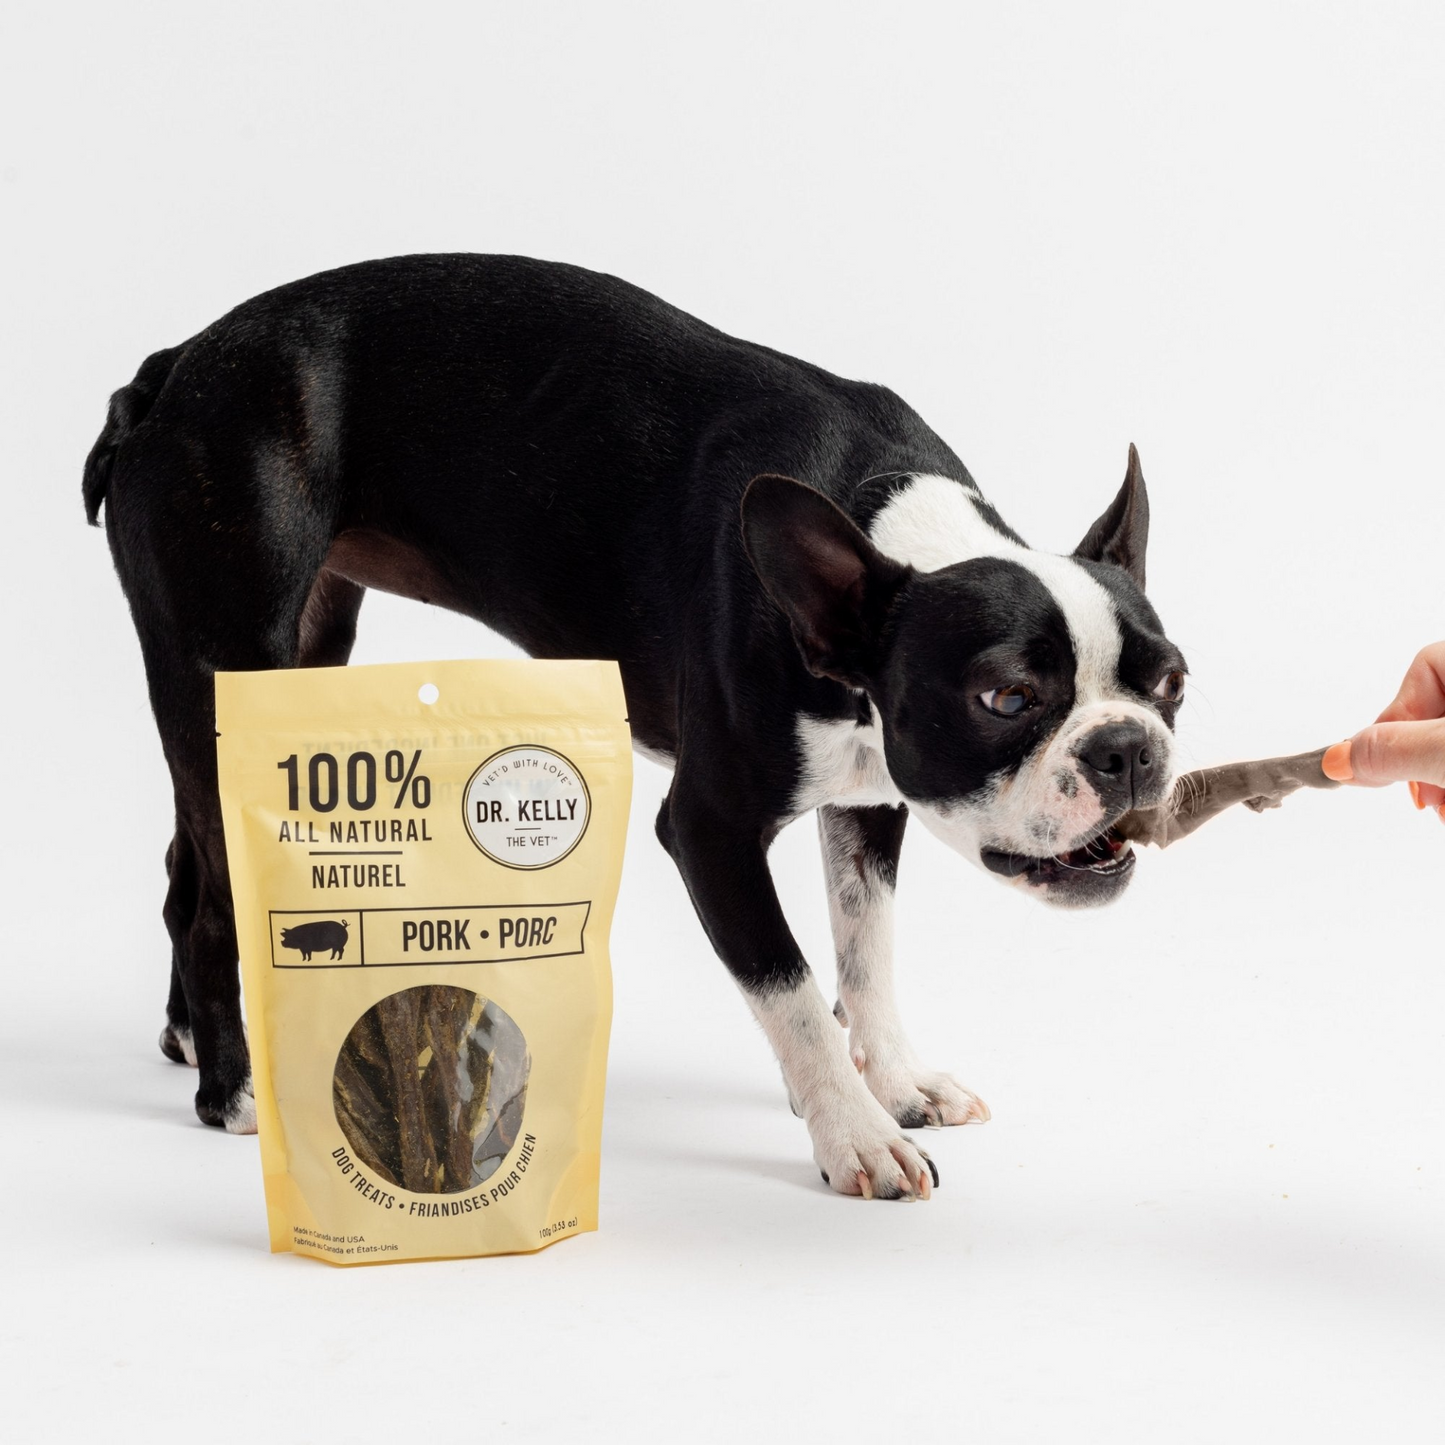 Dr. Kelly The Vet 100% Natural Dog Treats - Pork